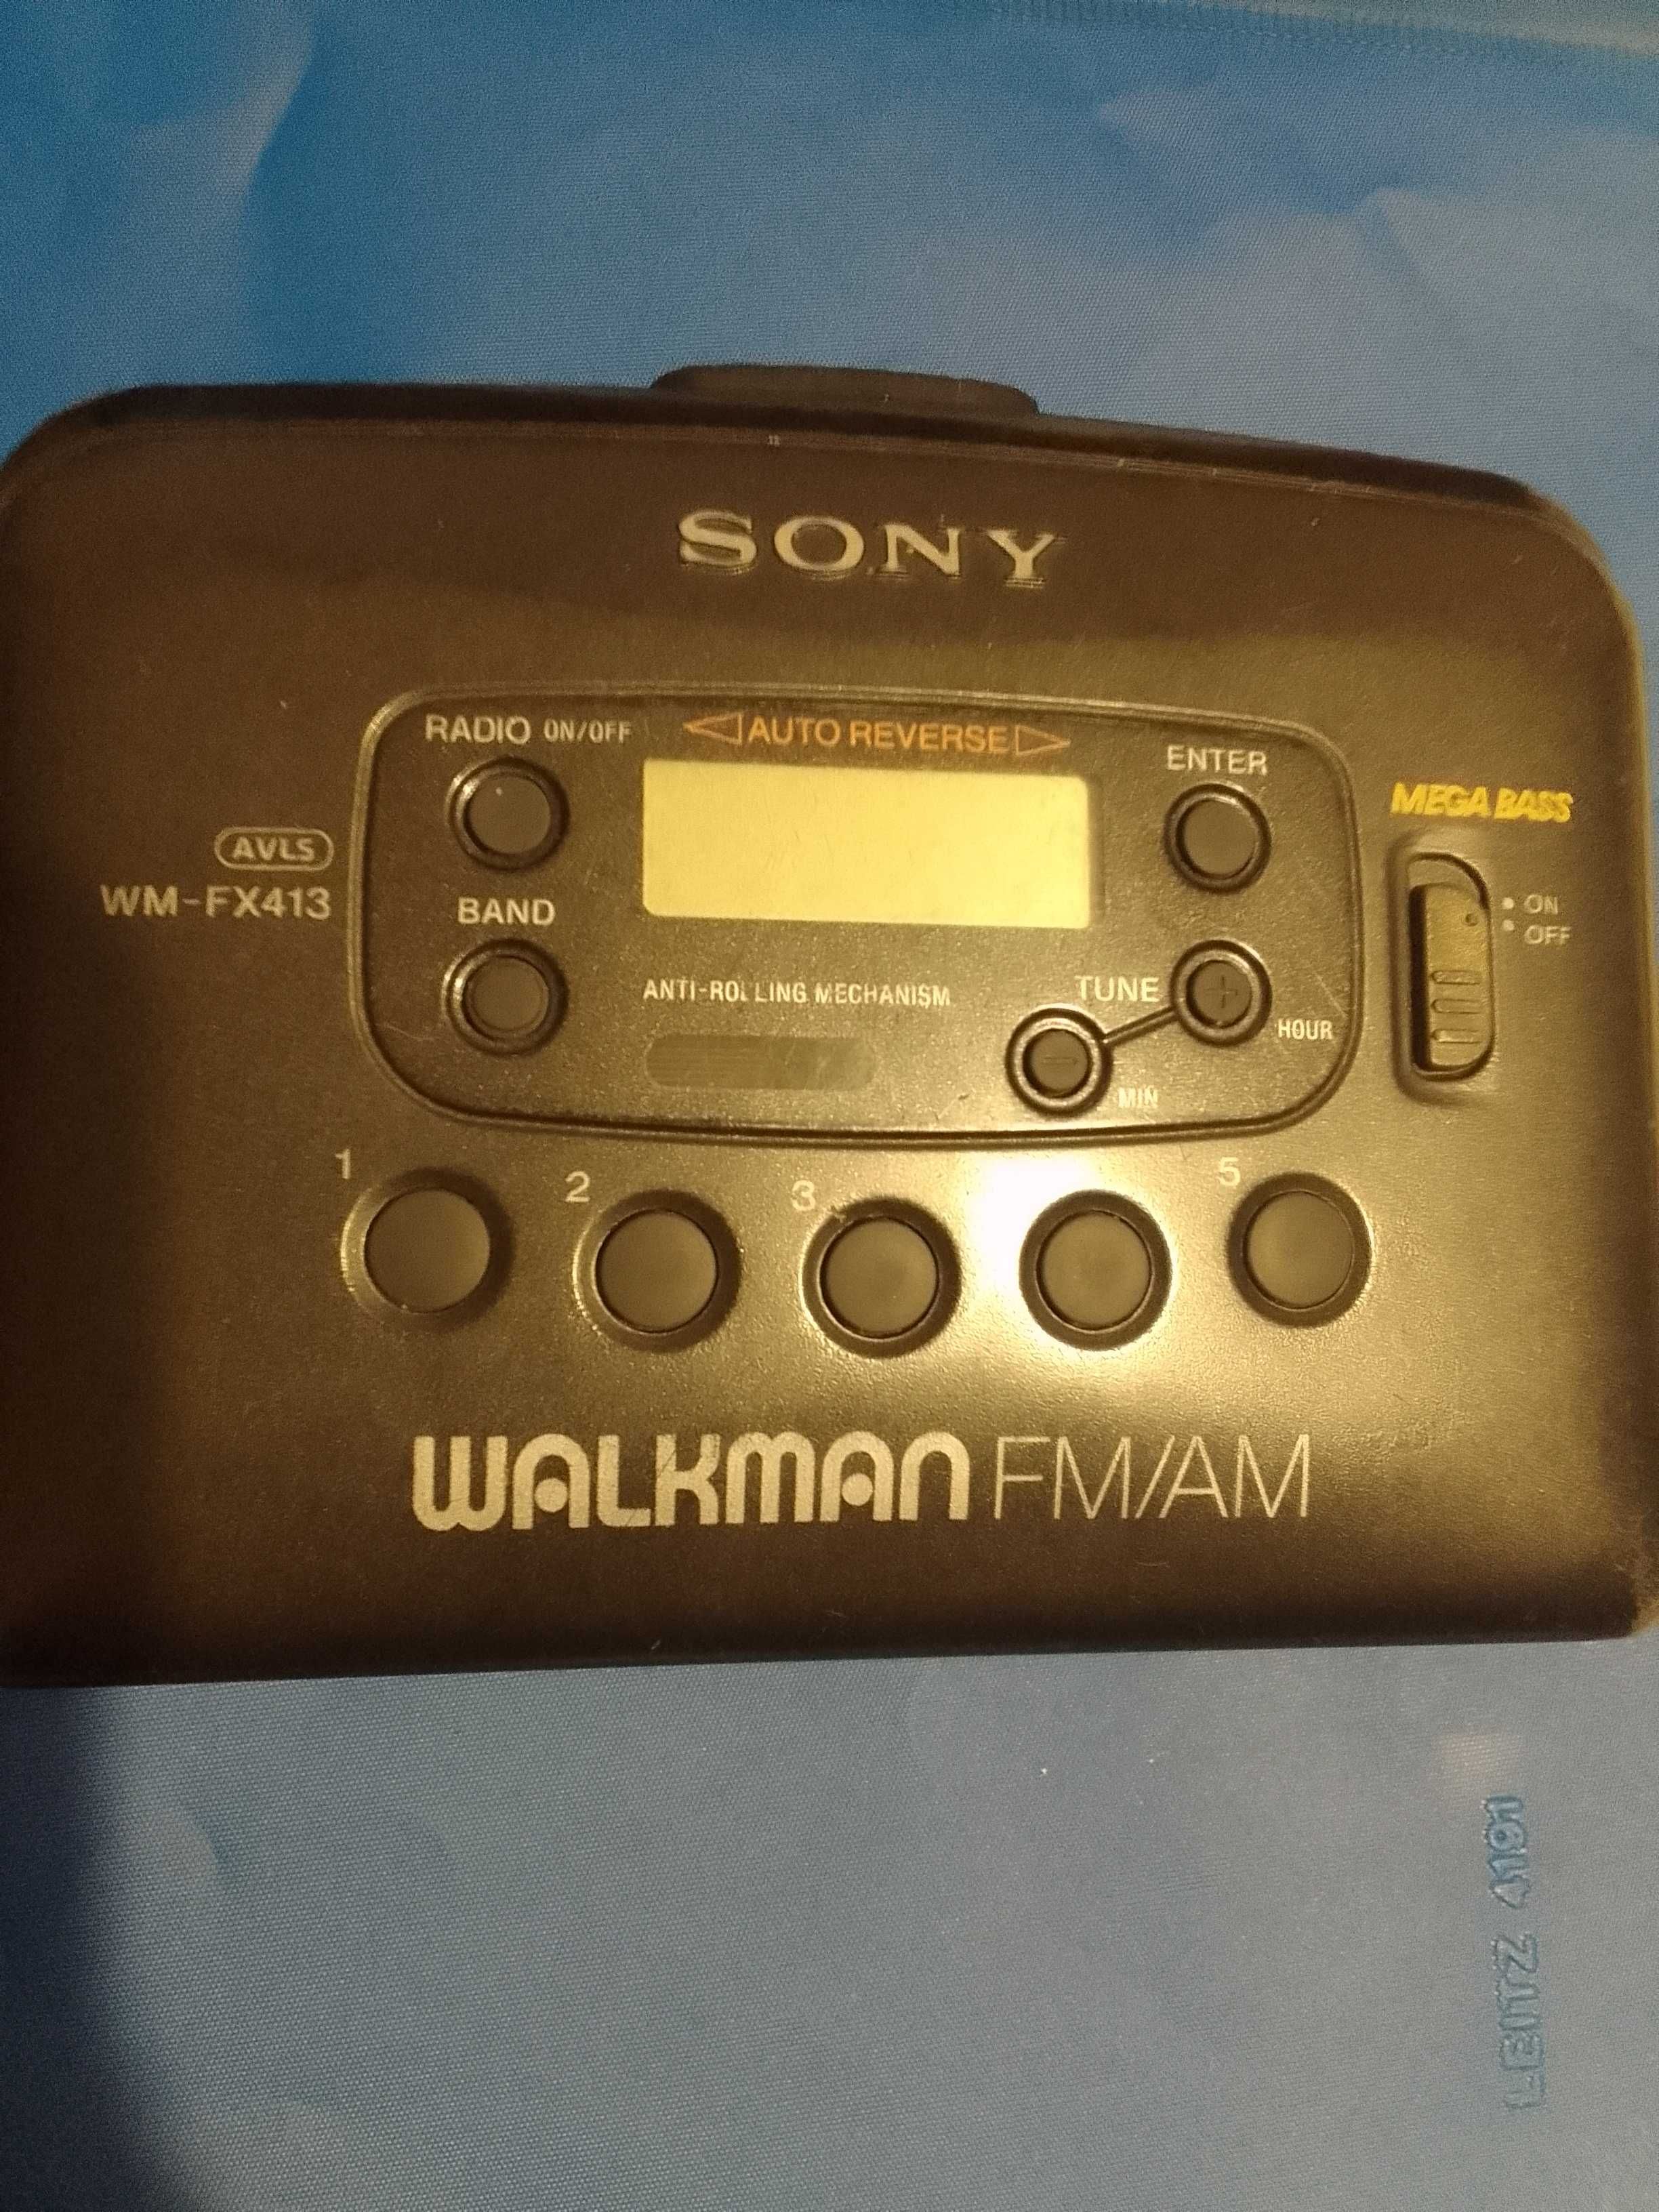 Walkman fm/am sony a trabalhar bem